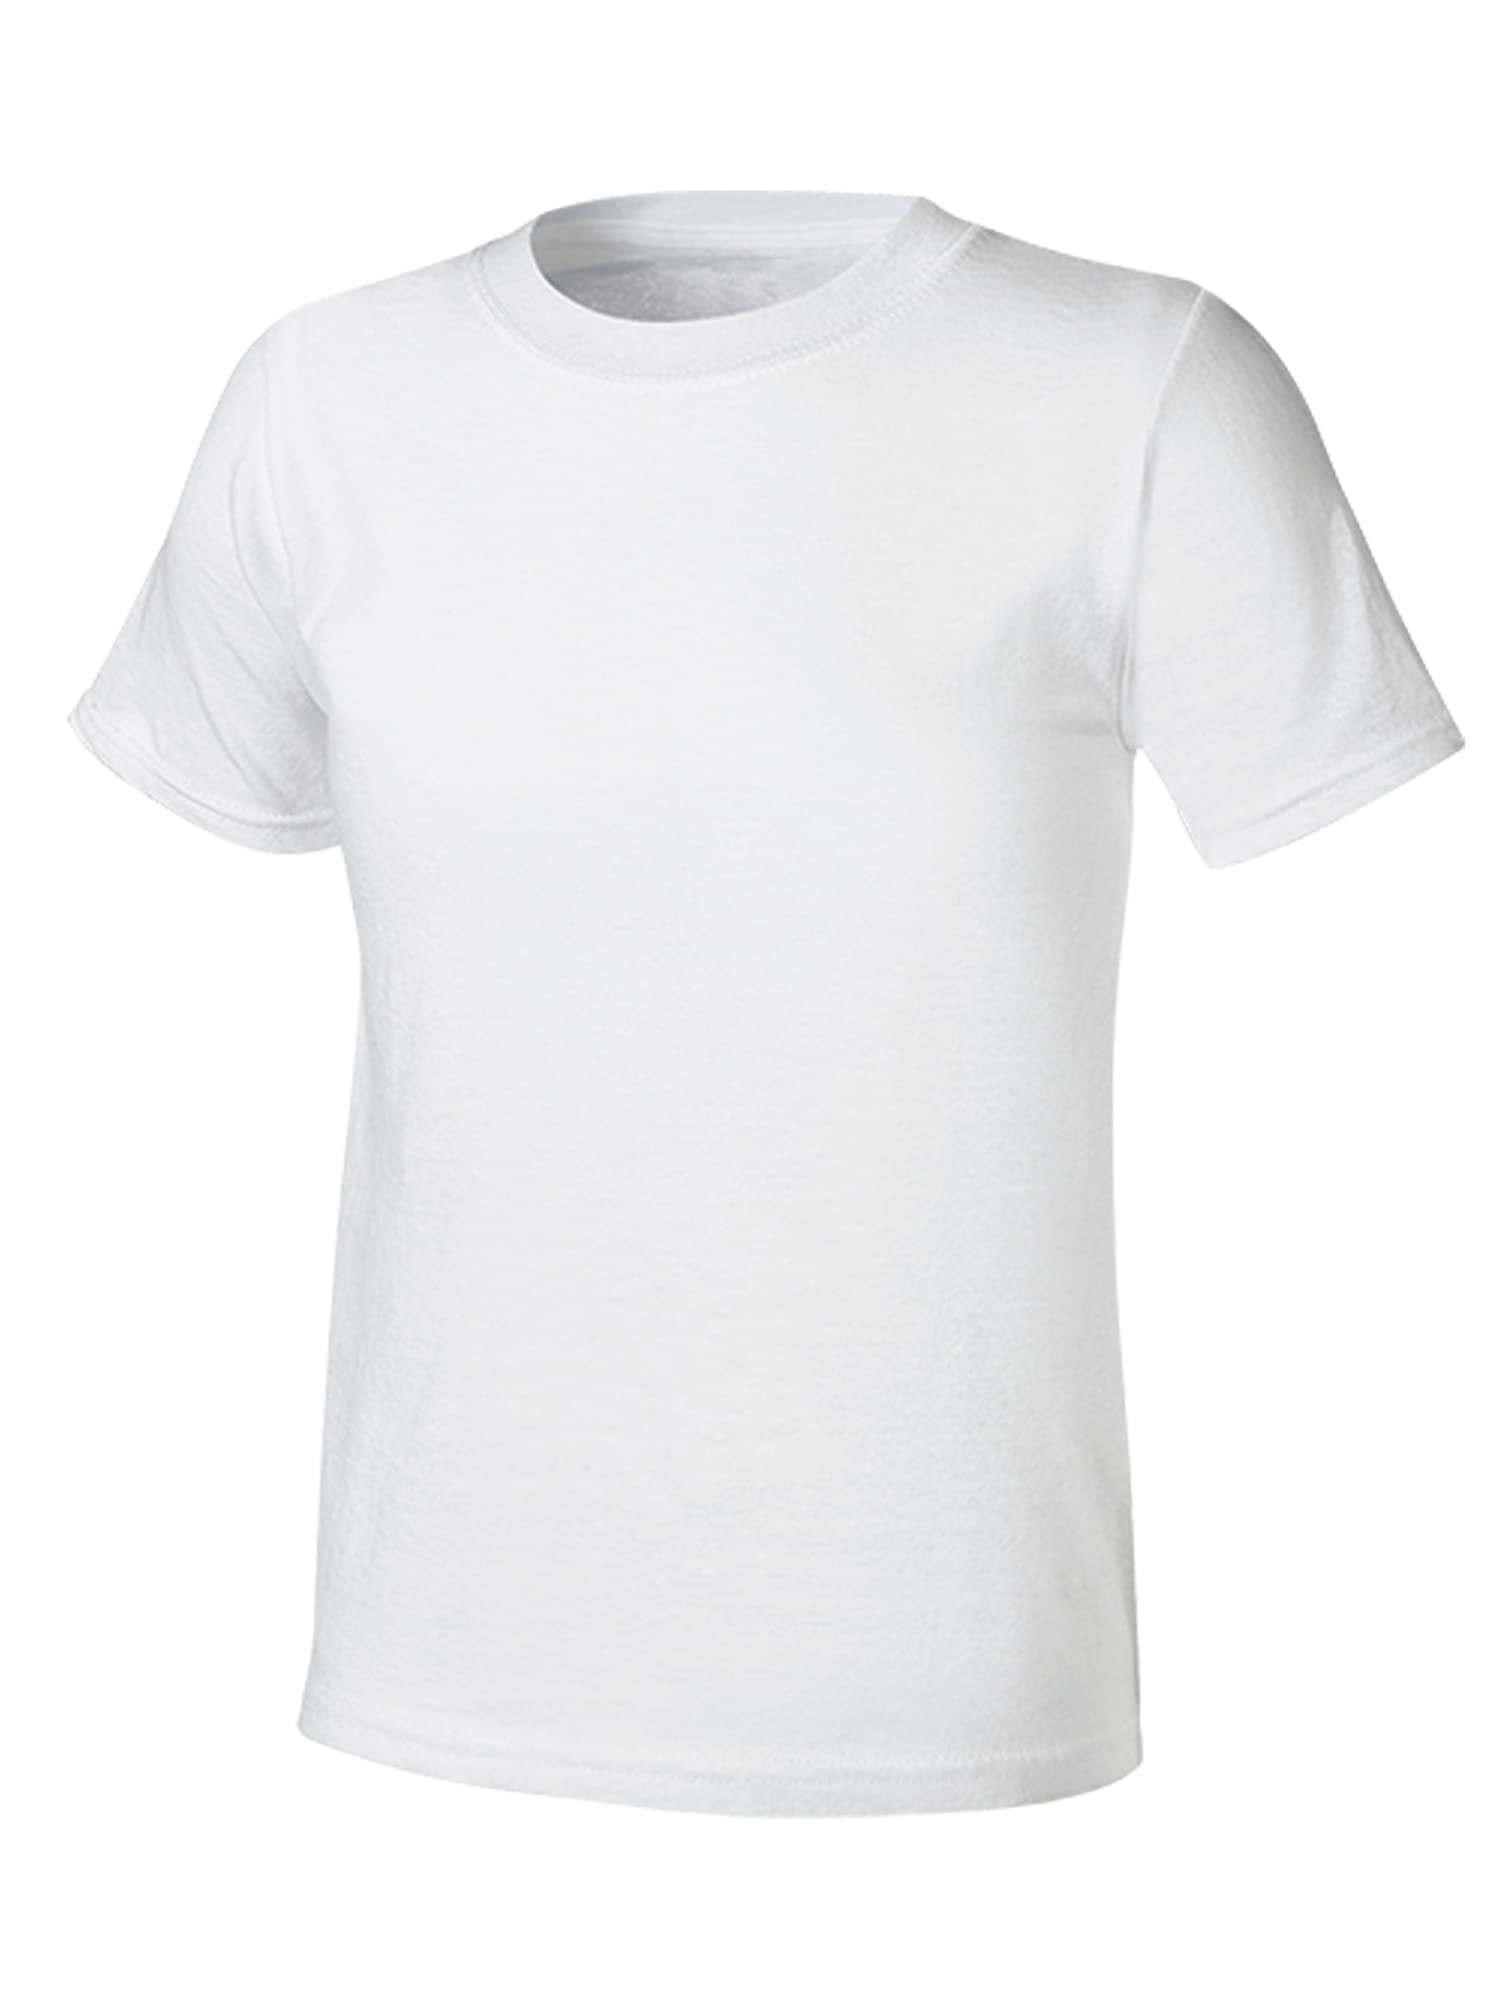 Hanes Boys' Undershirt, EcoSmart Short Sleeve Crew Shirts, Multiple Packs Available